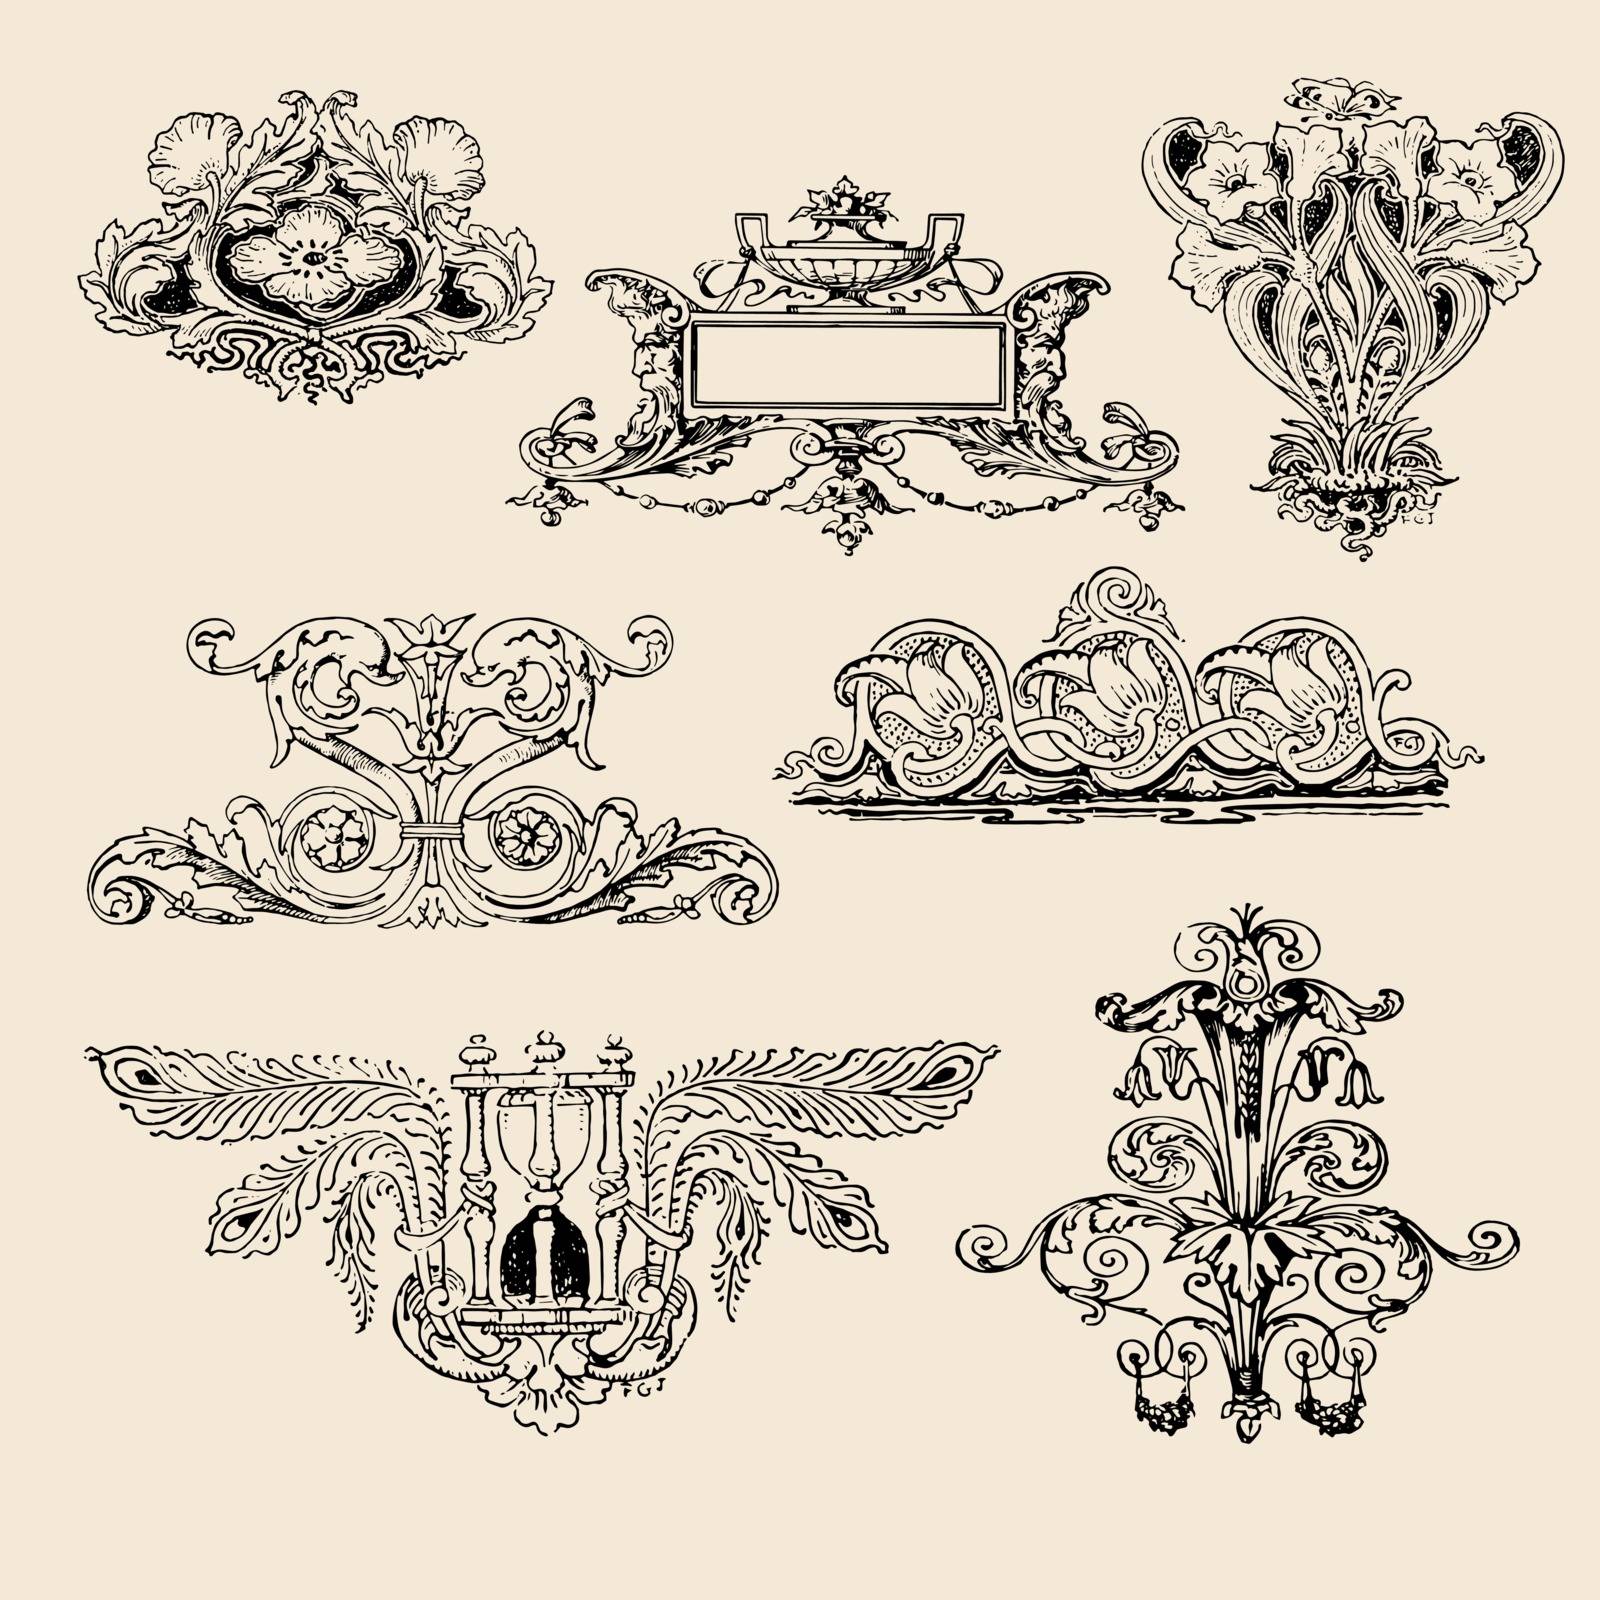 Decorative elements by vtorous